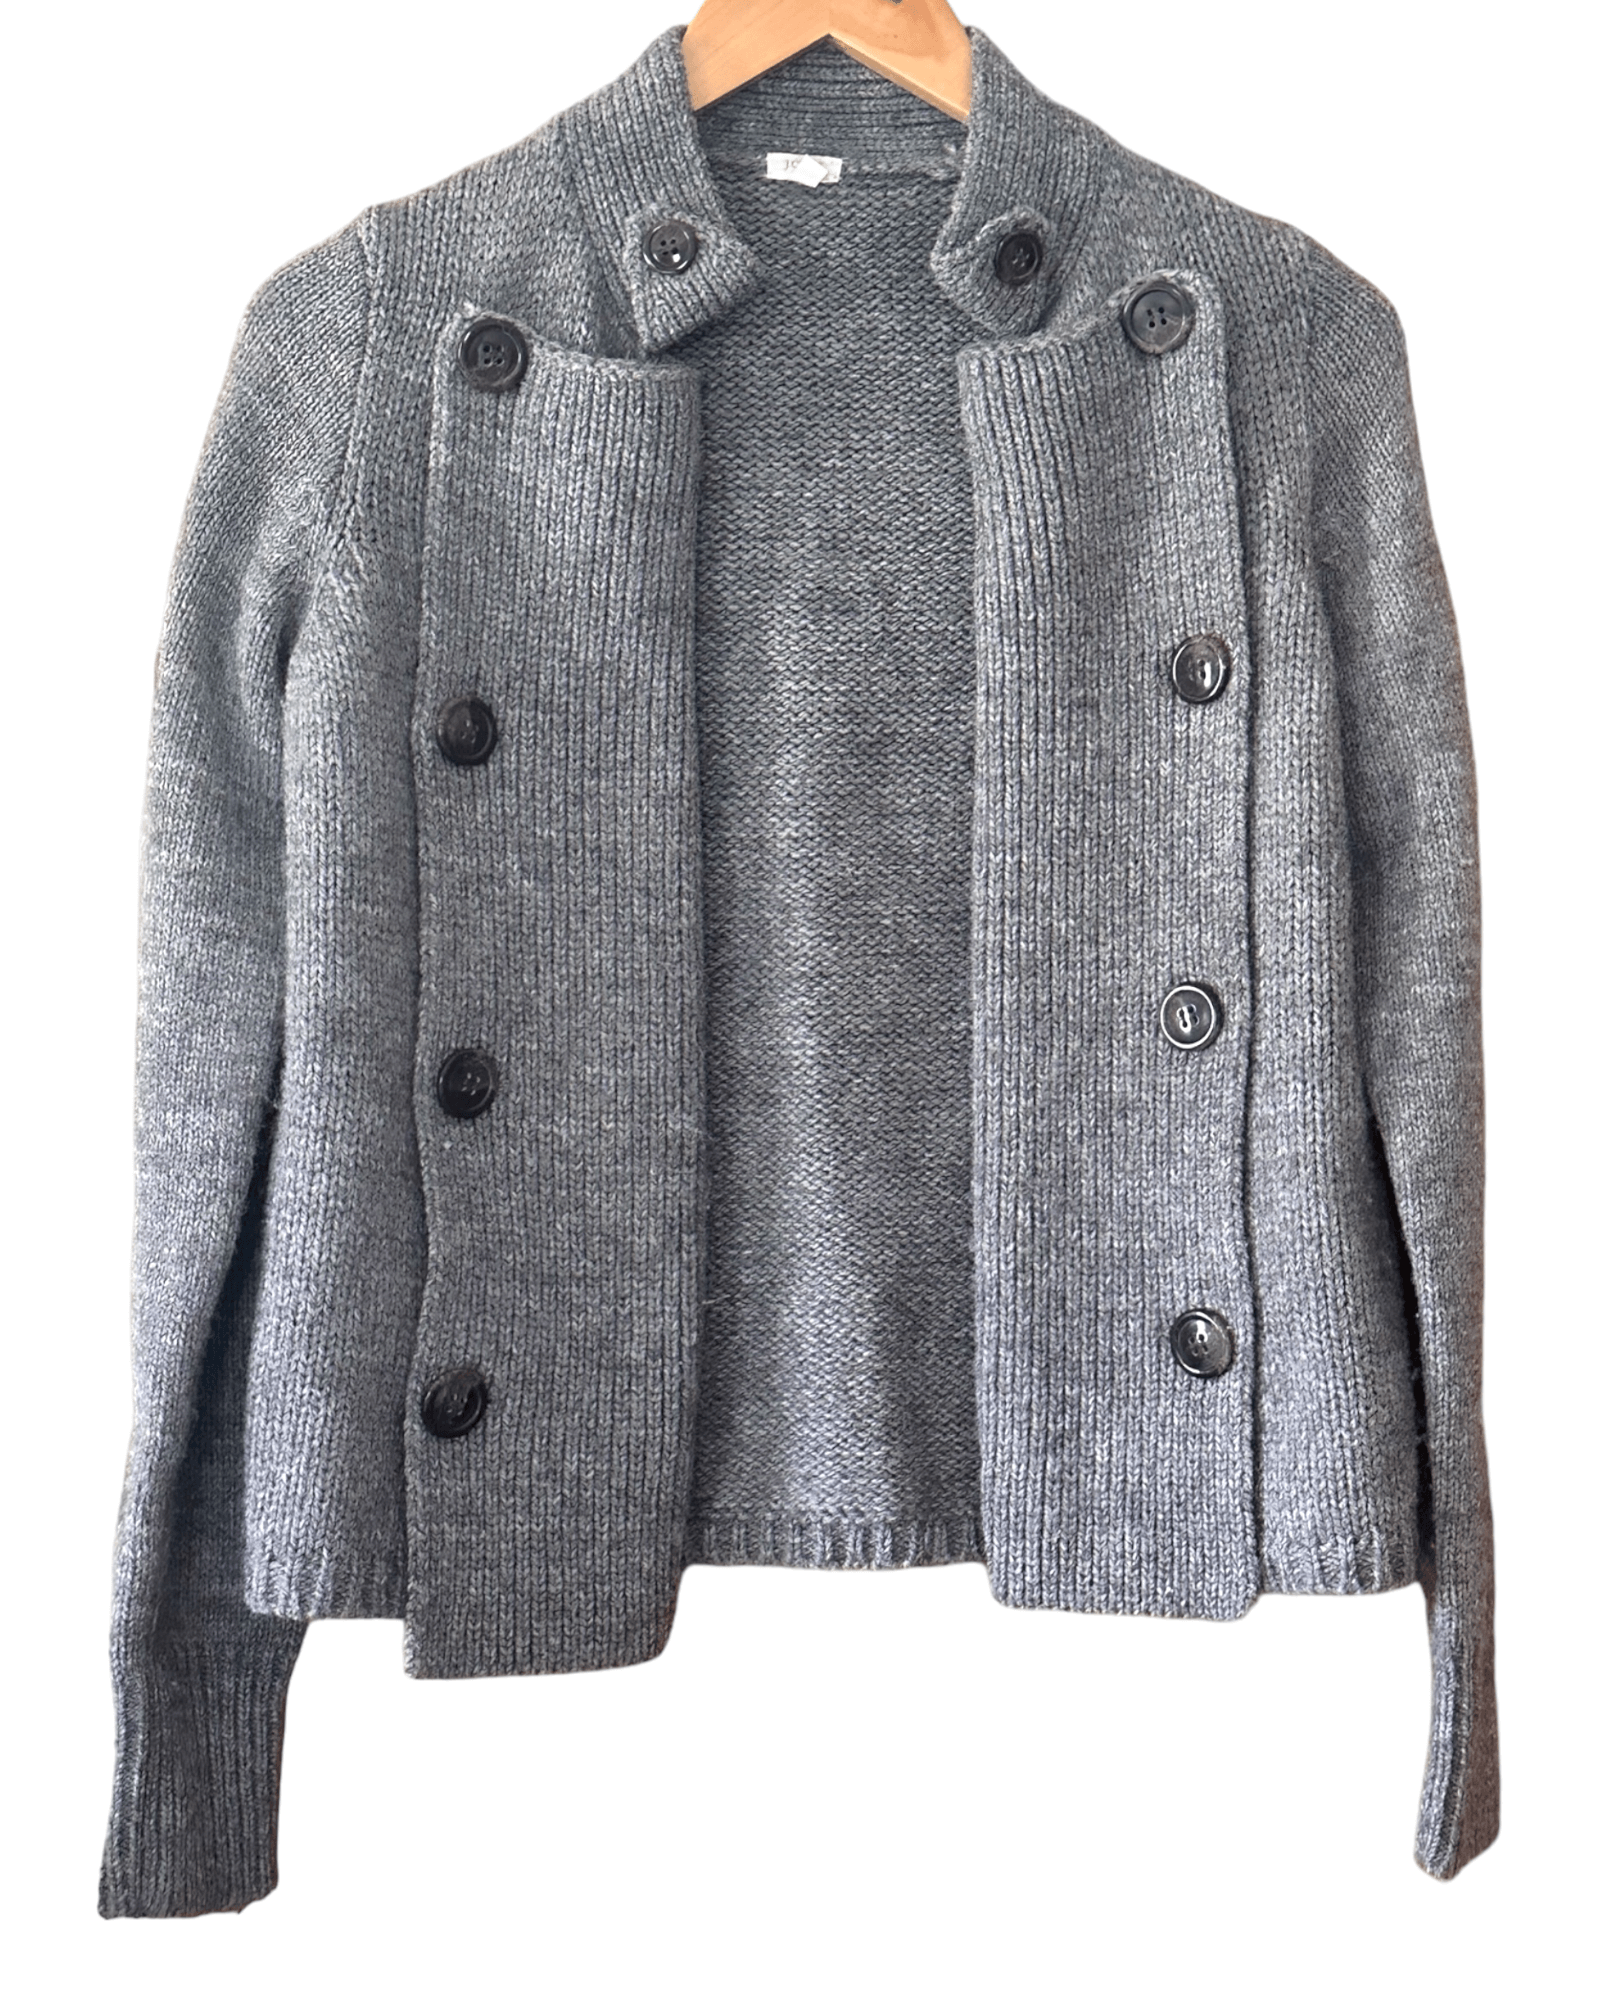 Cool Summer J.CREW gray wool cardigan sweater jacket